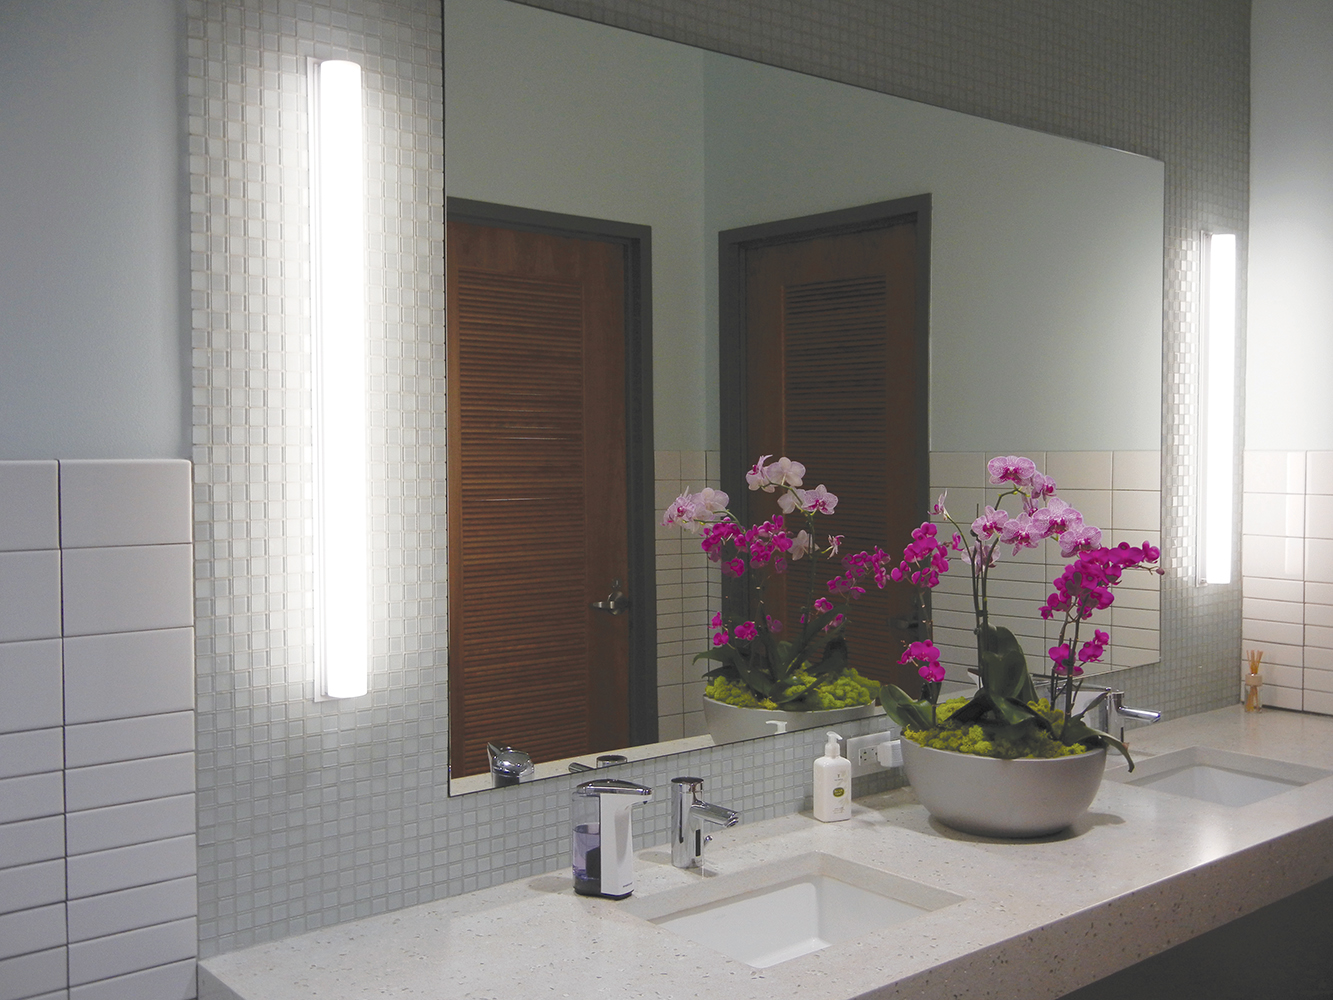 Voila modern vanity light fixtures illuminate mirrors in sleek, clean restroom with a bowl of purple flowers between two sinks.